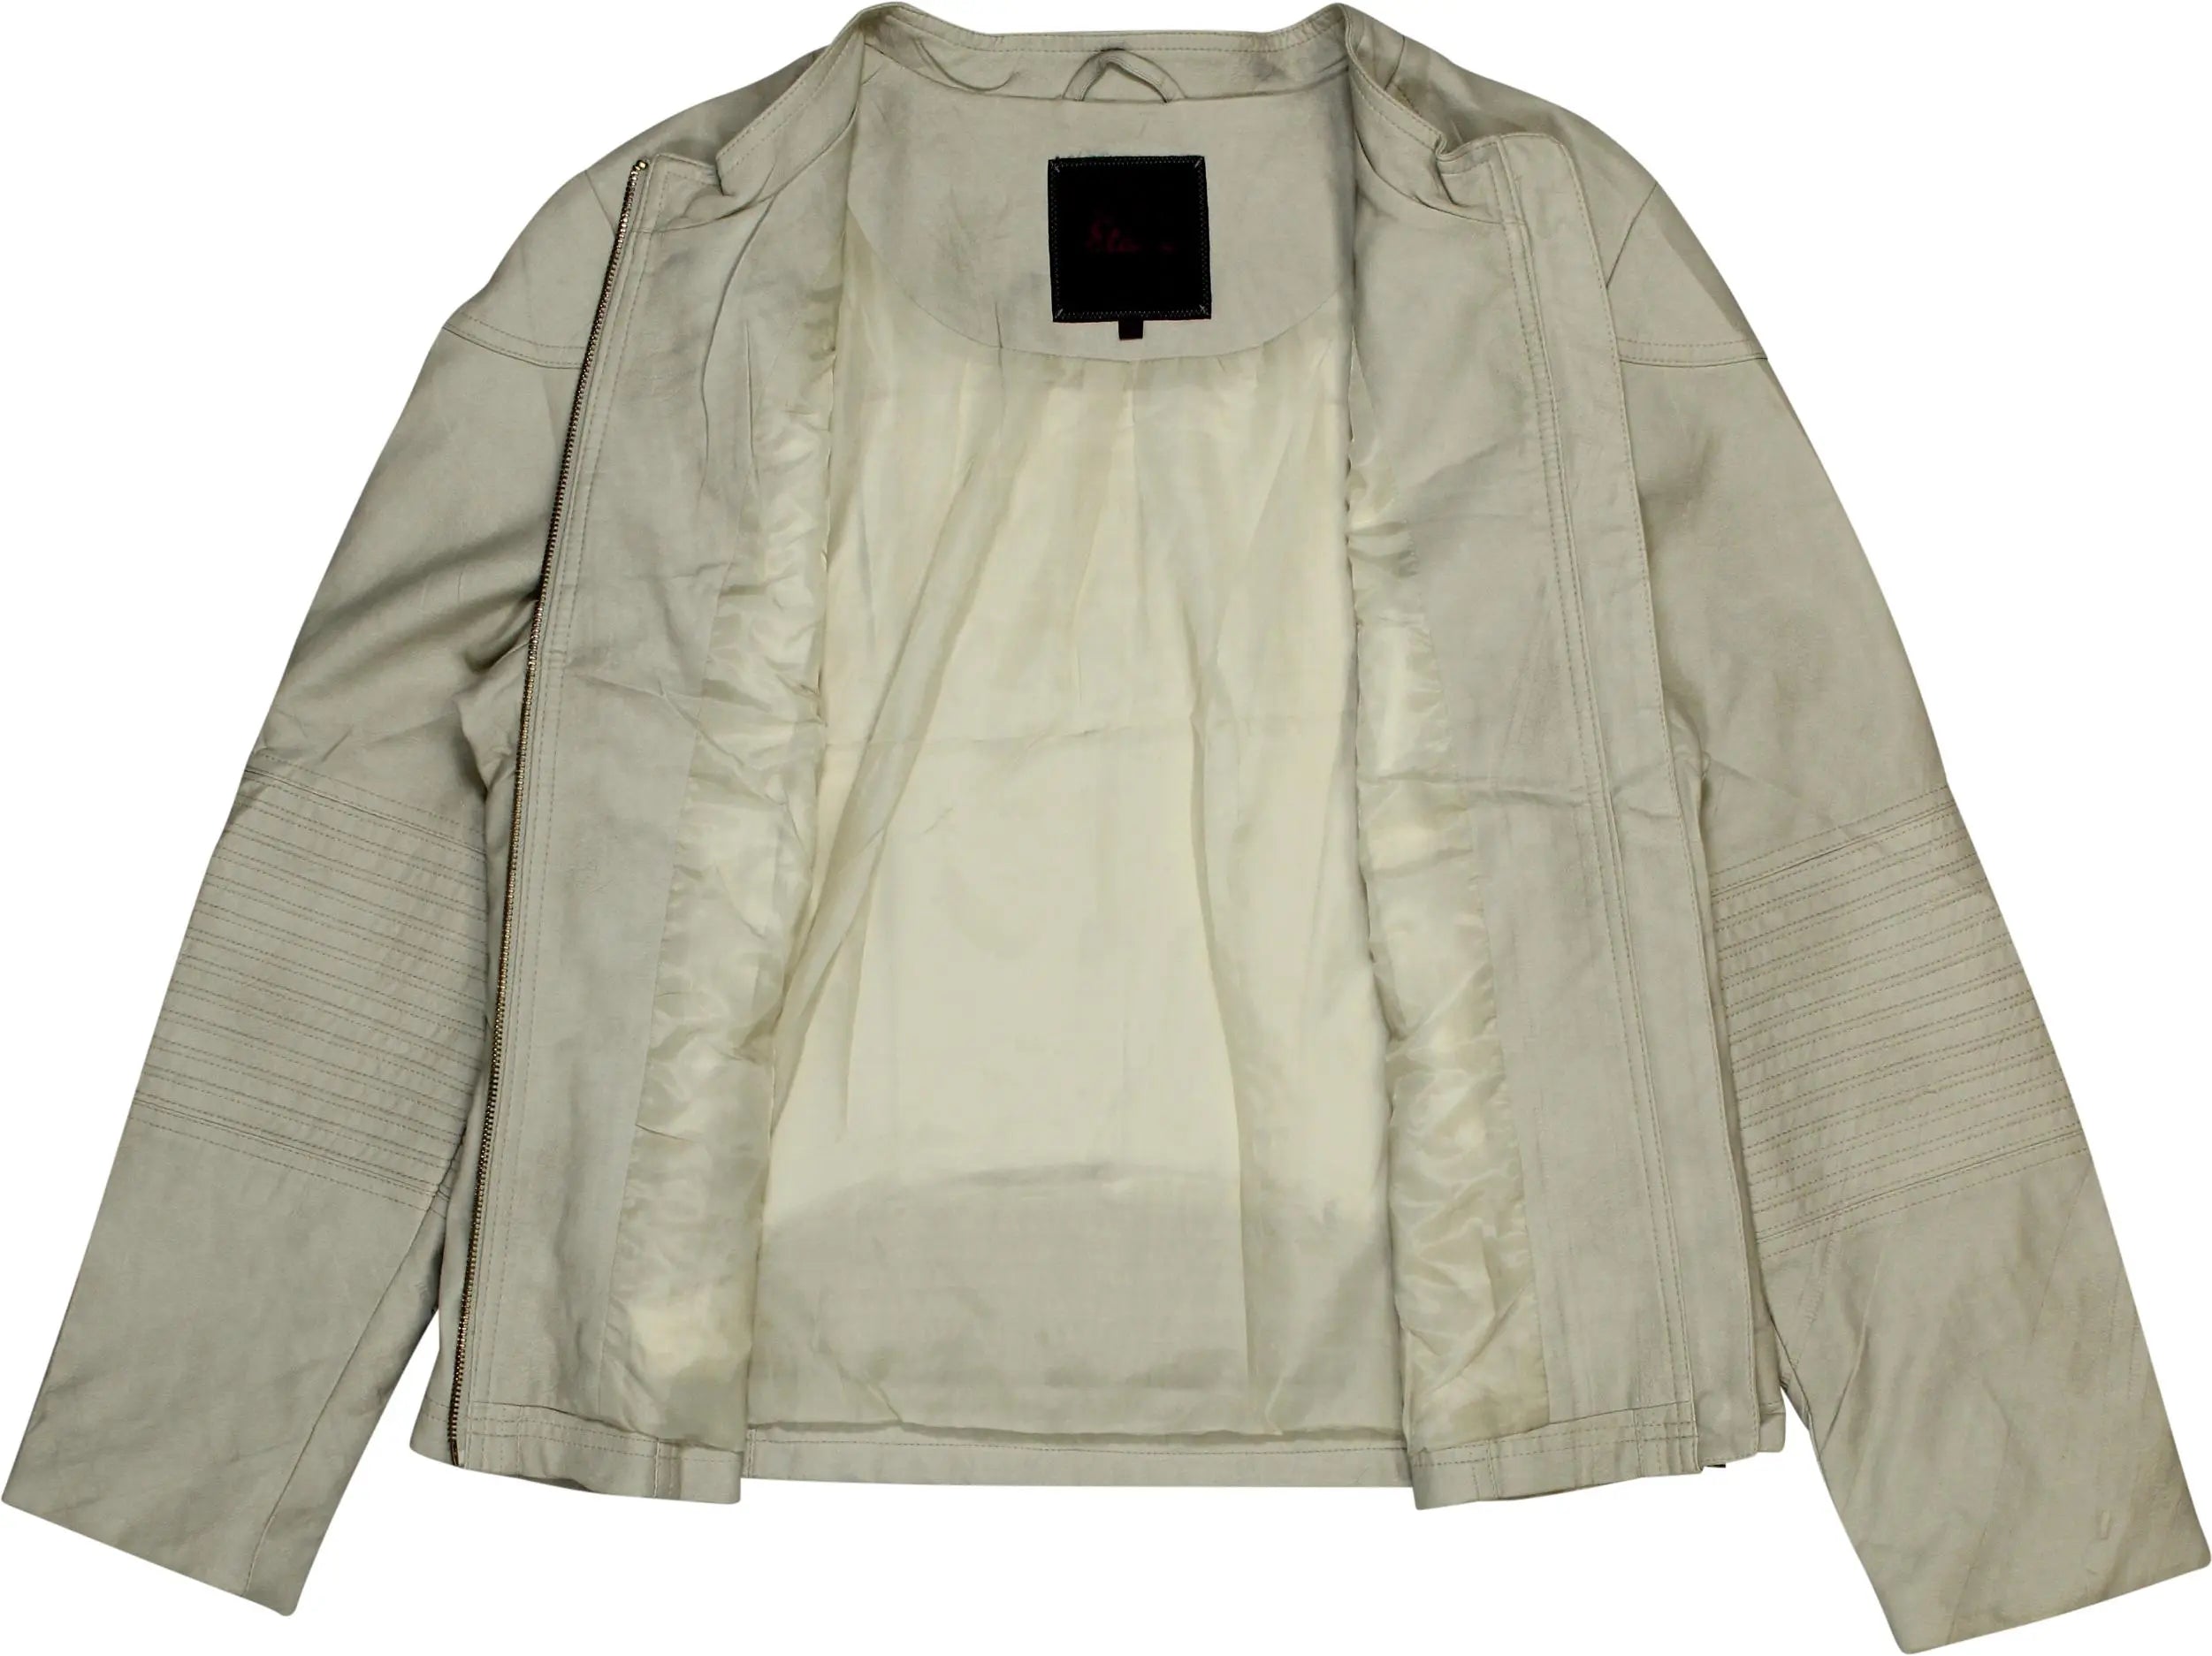 Miss Etam - Cream Leather Jacket- ThriftTale.com - Vintage and second handclothing